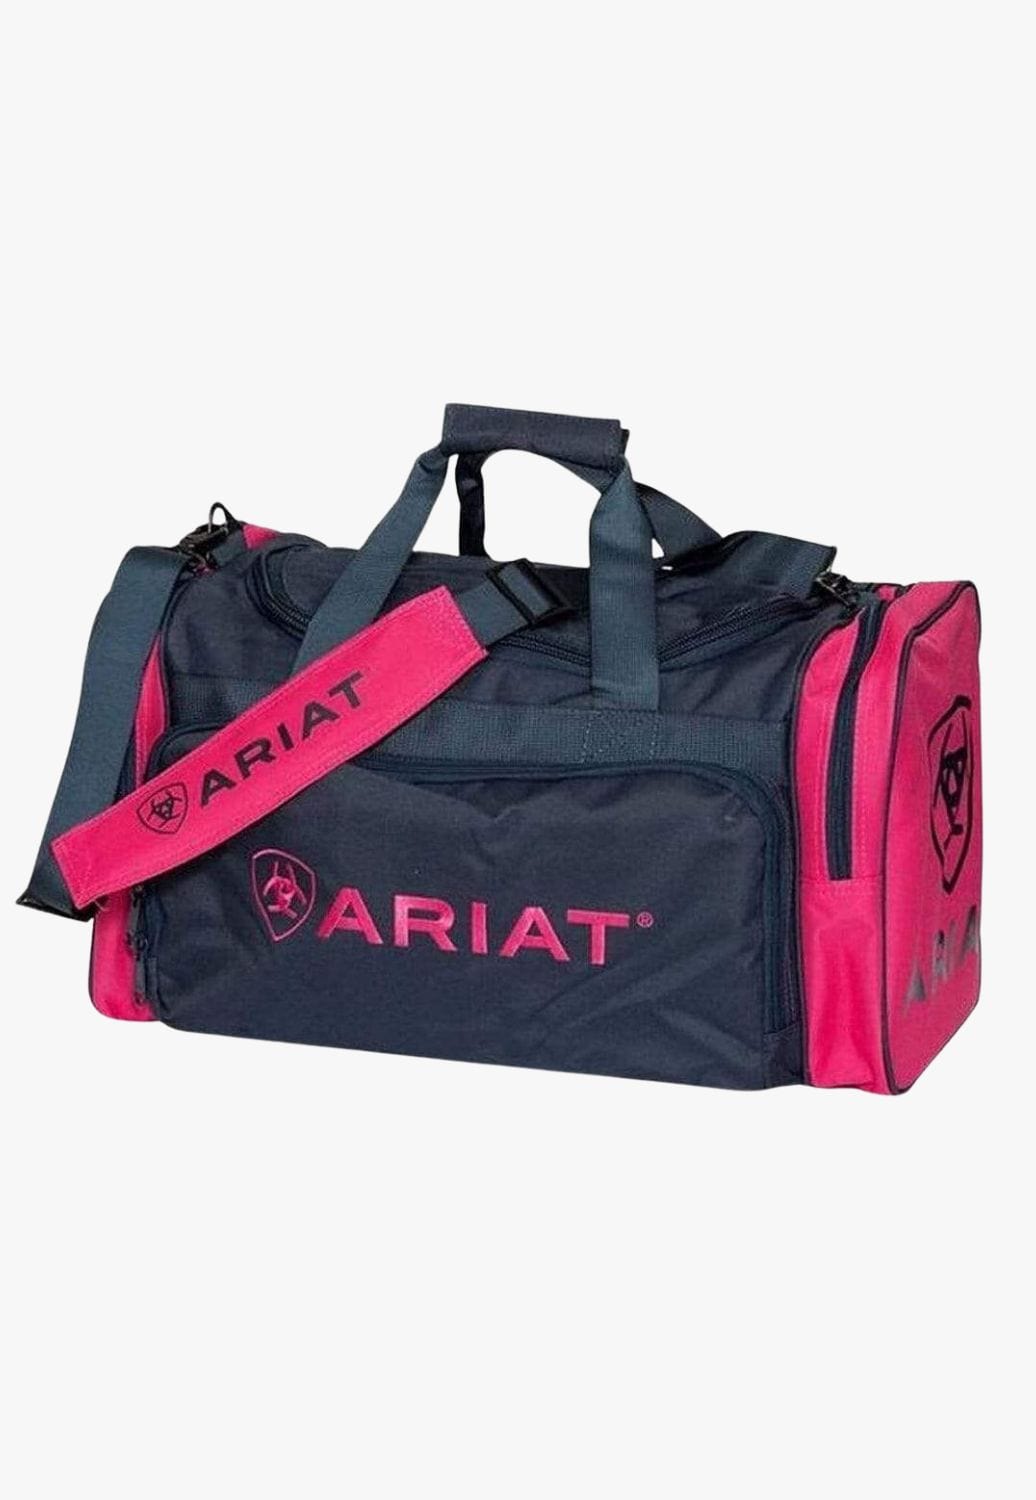 Ariat TRAVEL - Travel Bags Pink/Navy Ariat Gear Bag